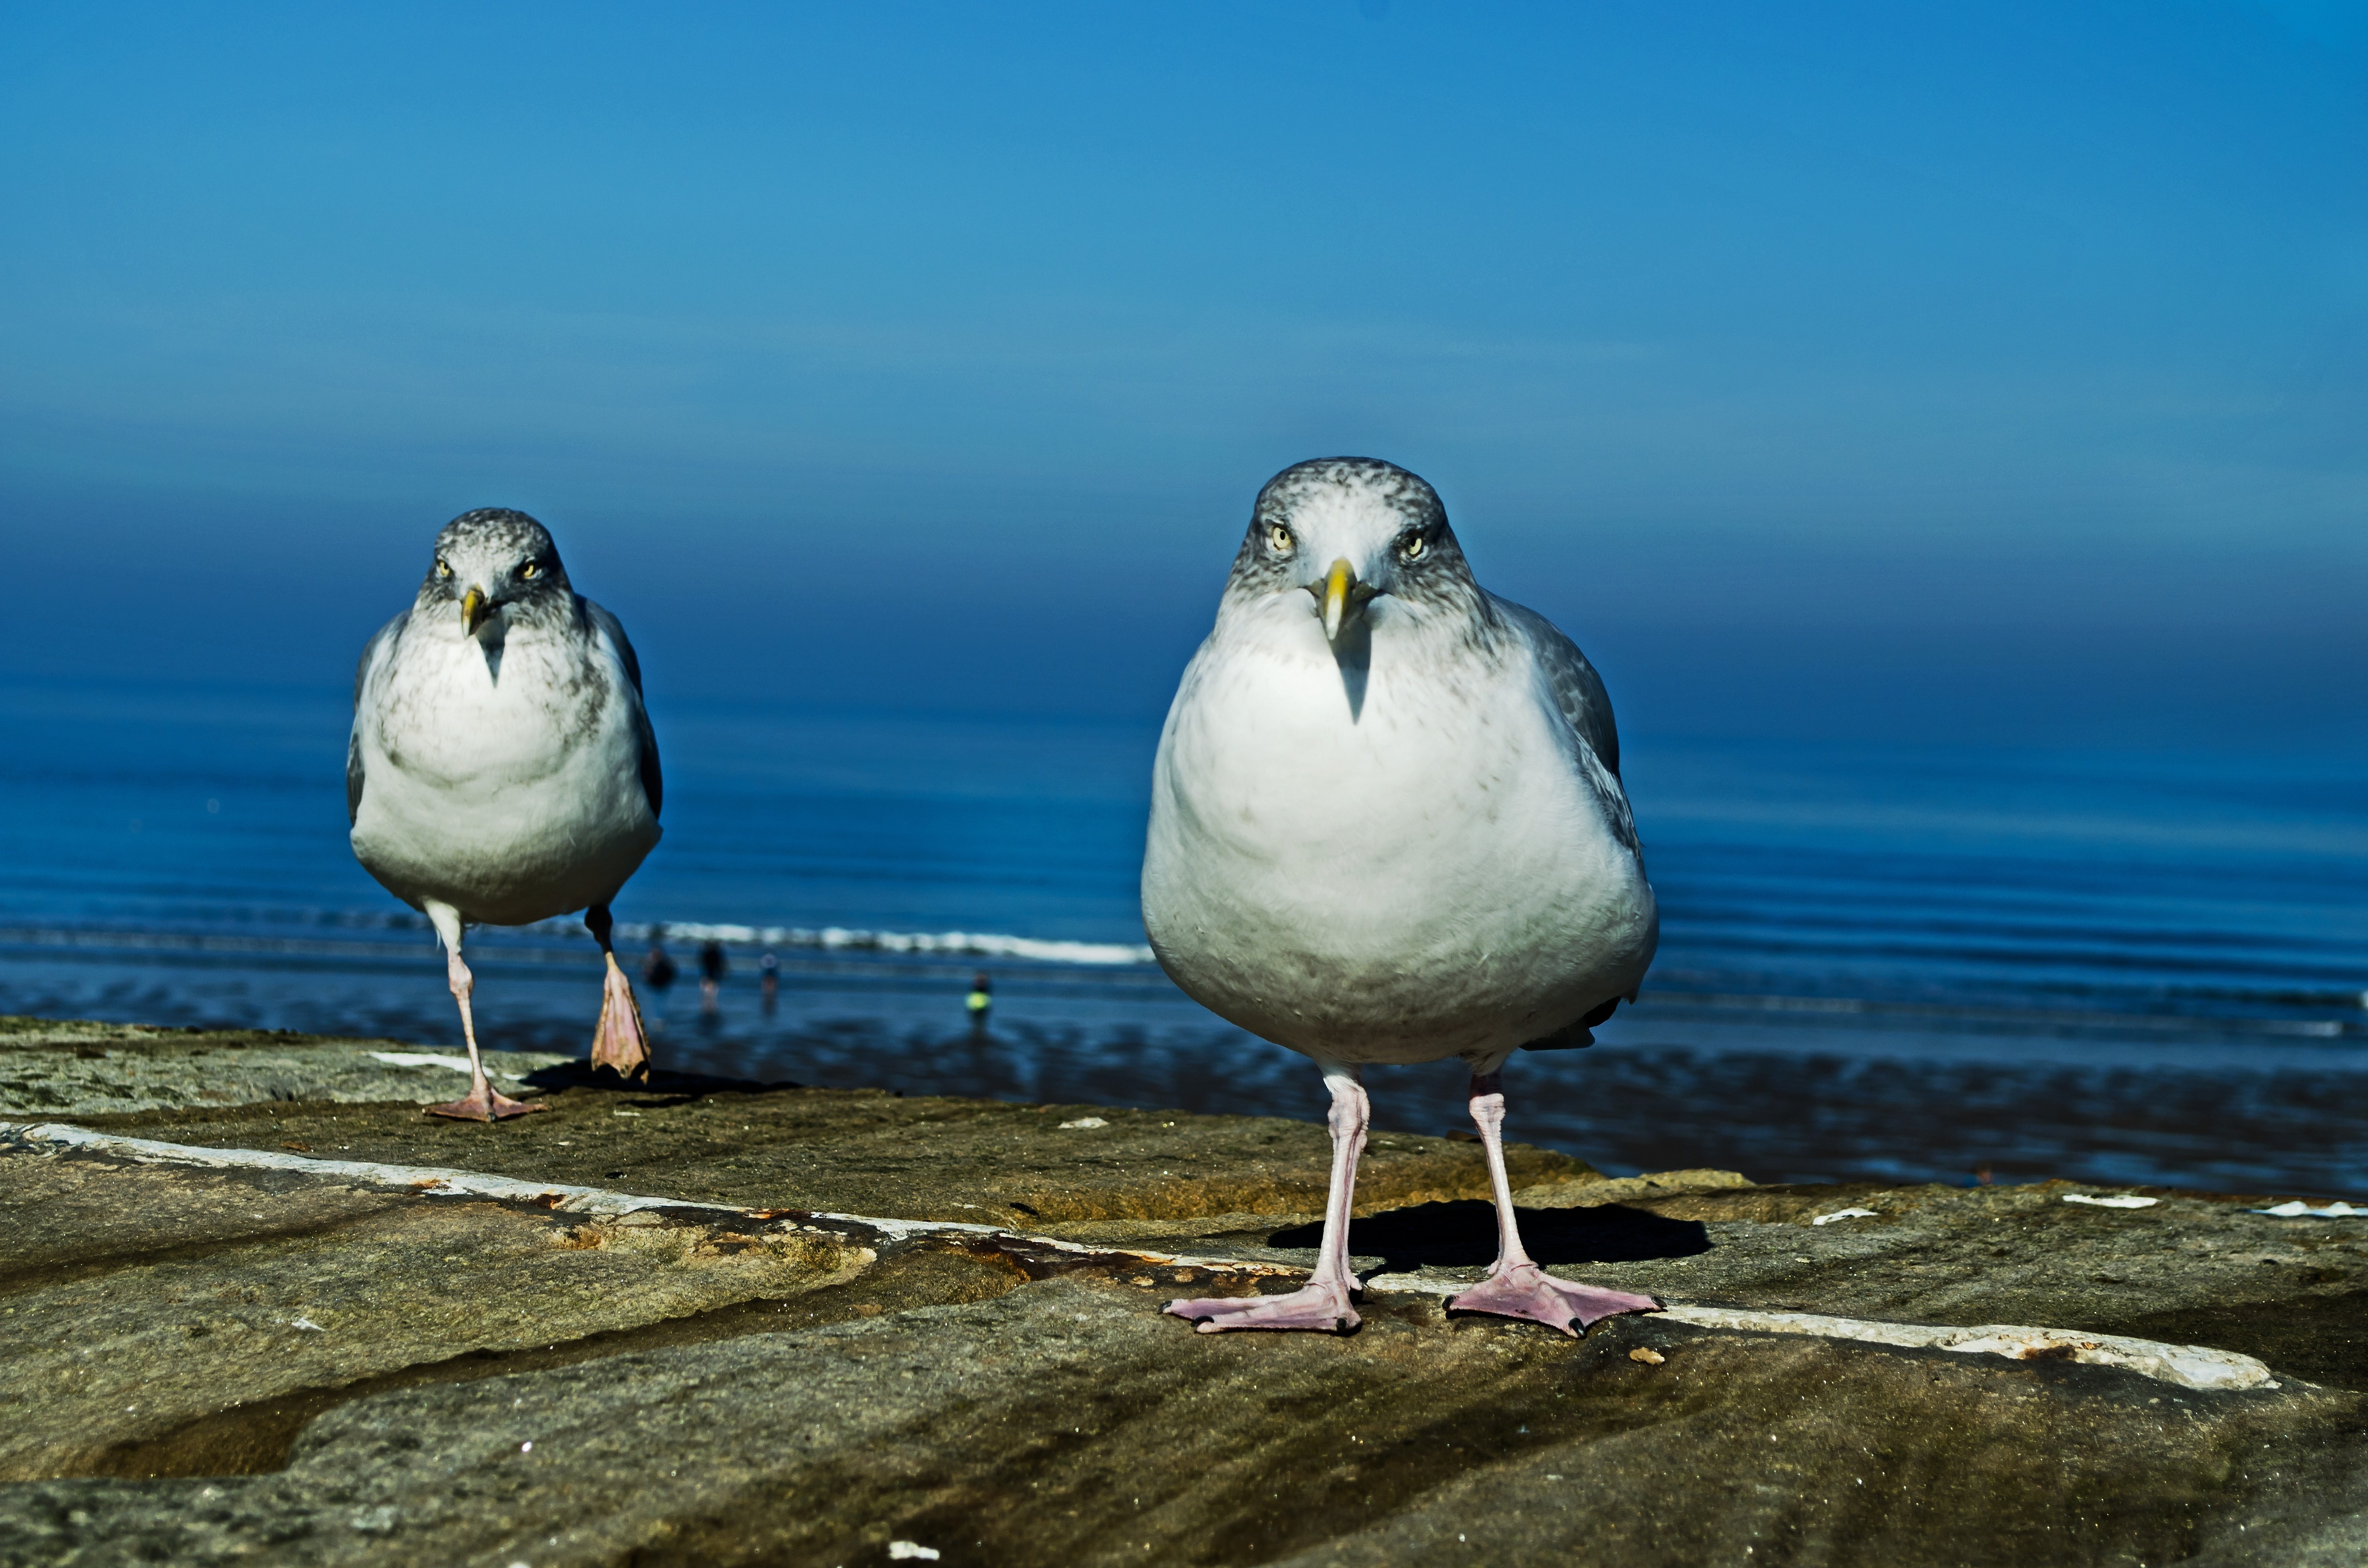 2 gray seagulls